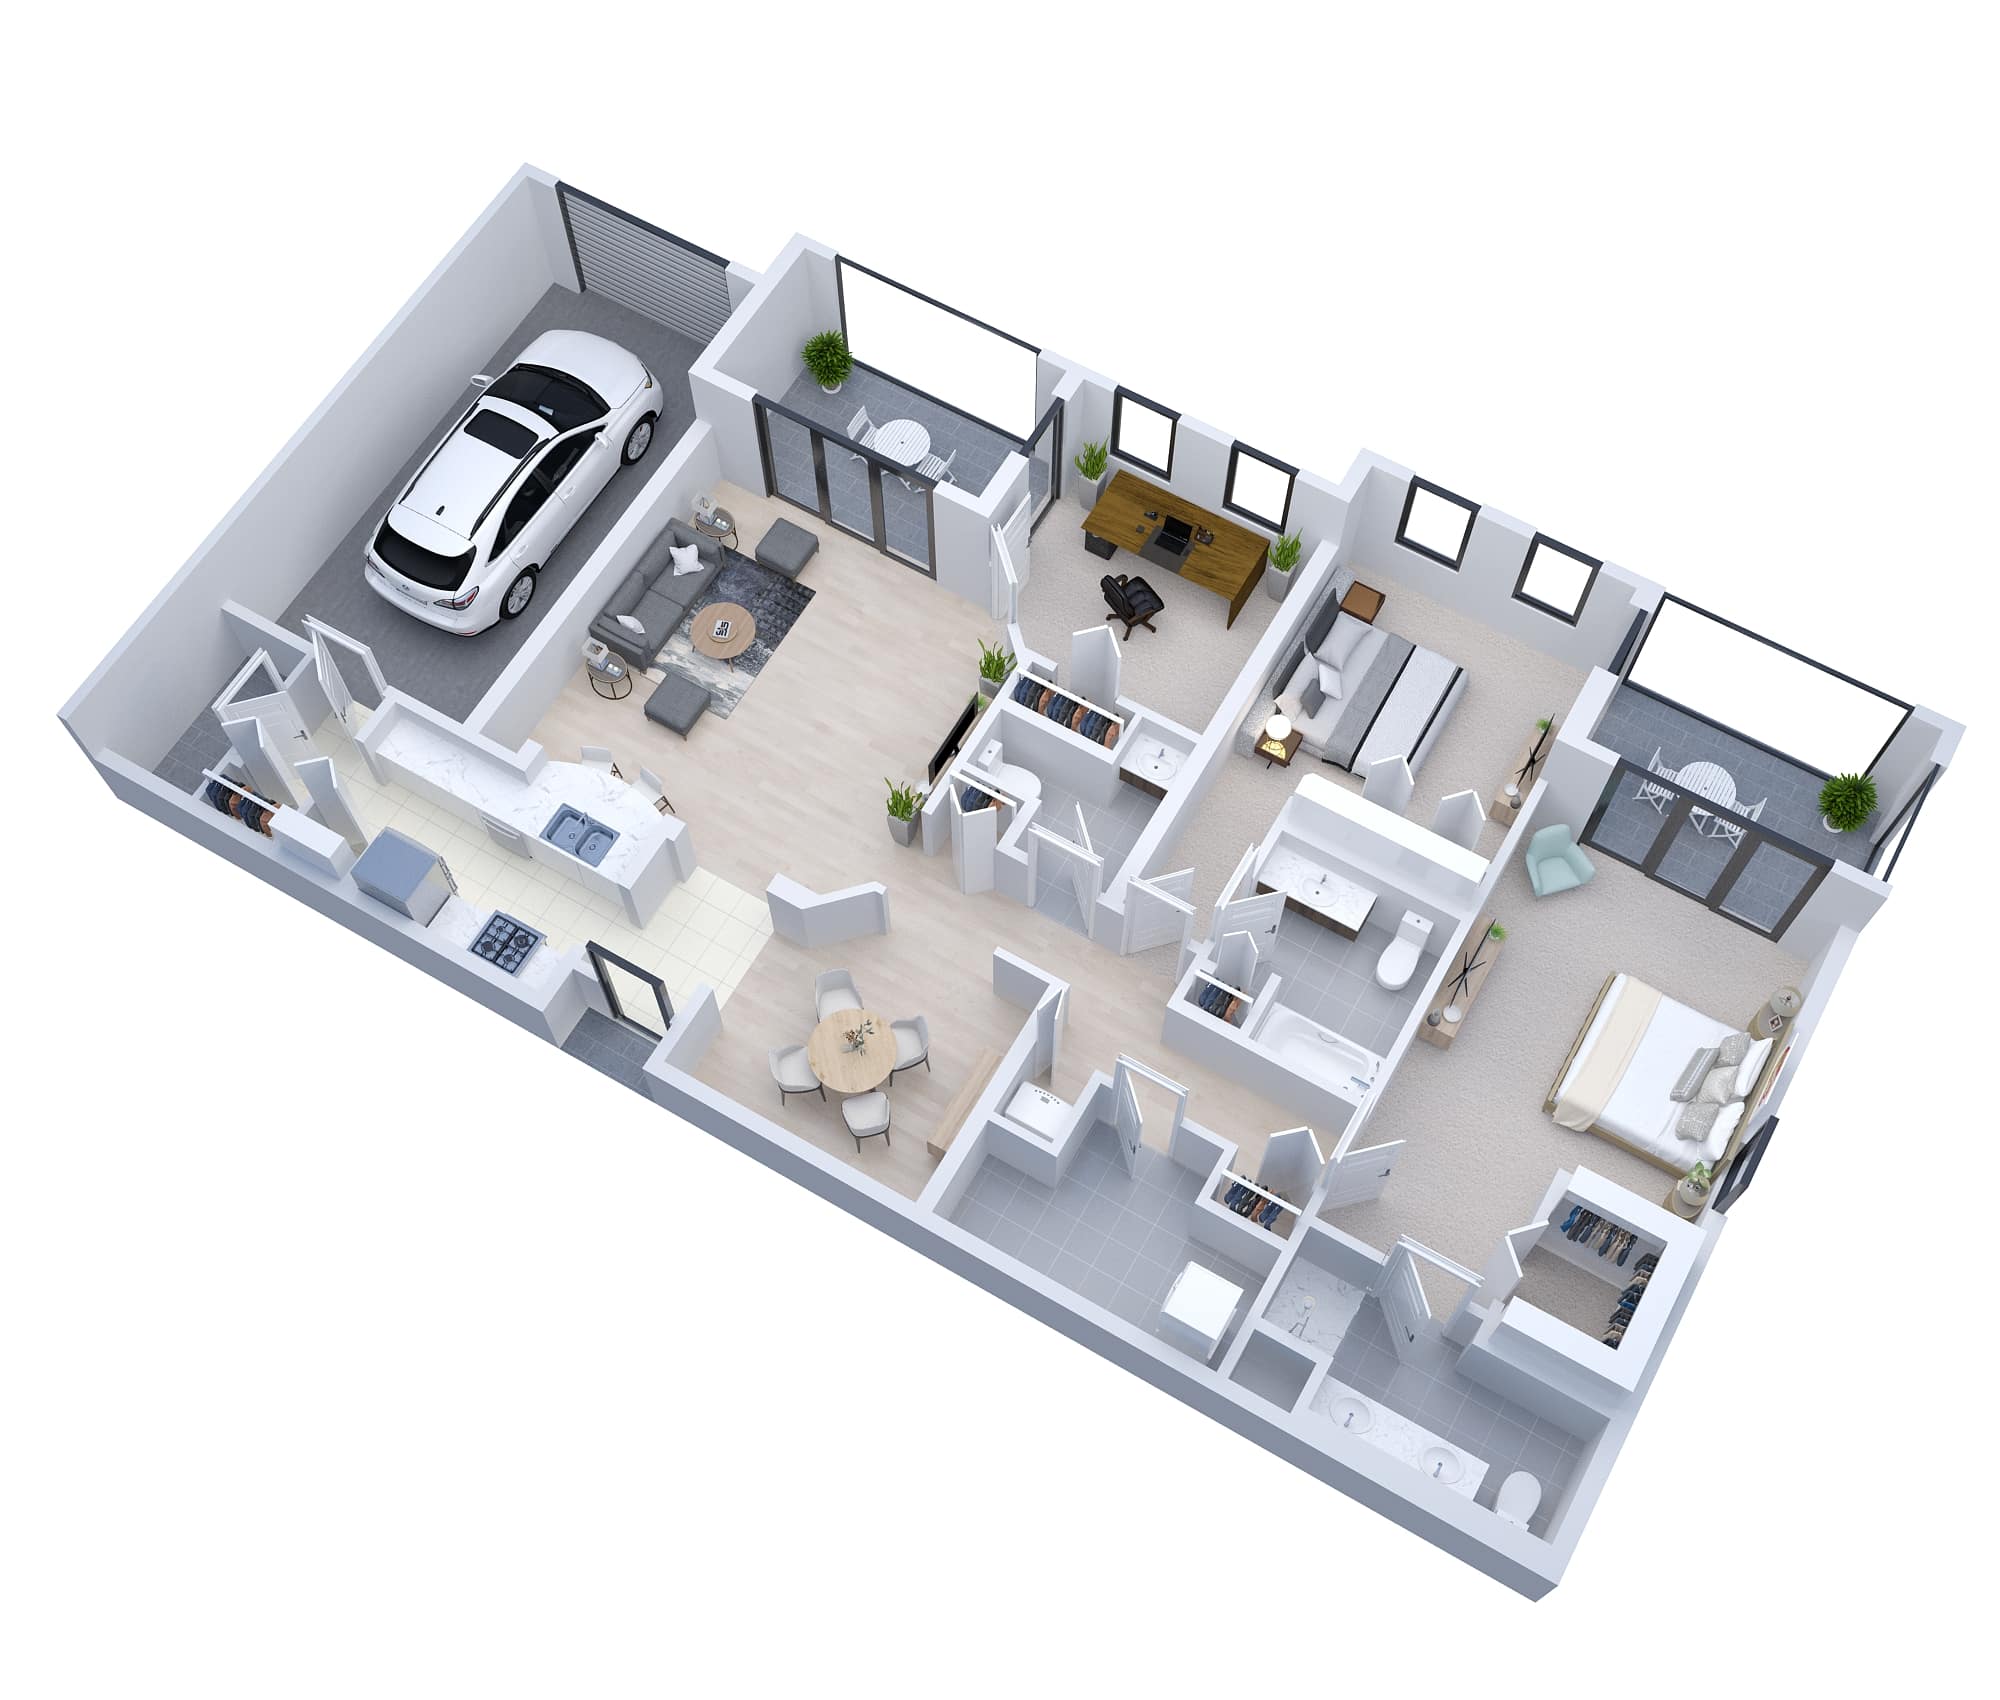 Pemberton Deluxe - senior living floor plan